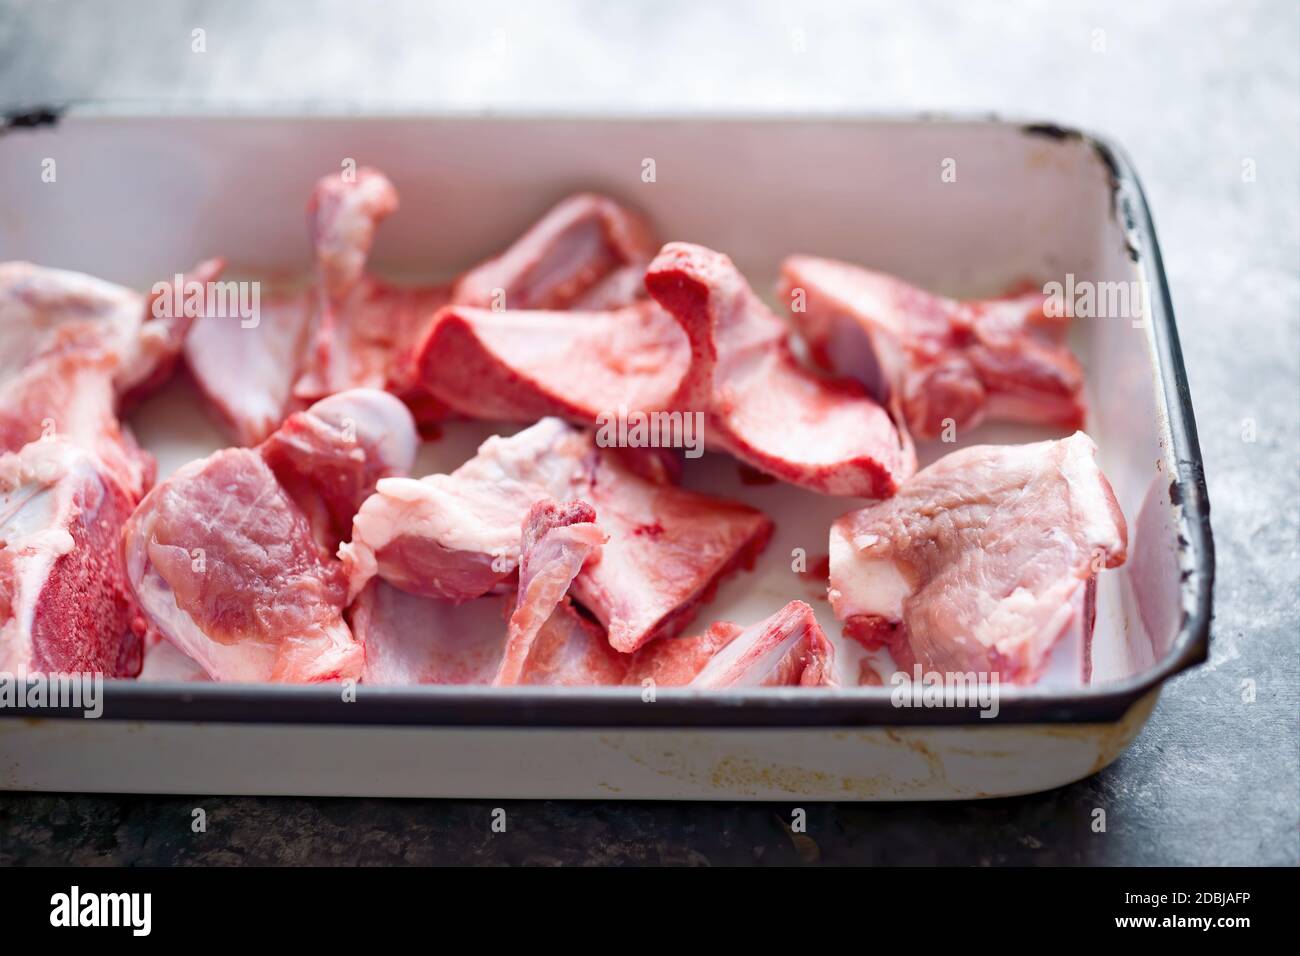 close up rustic pork bones flavoring ingredient Stock Photo